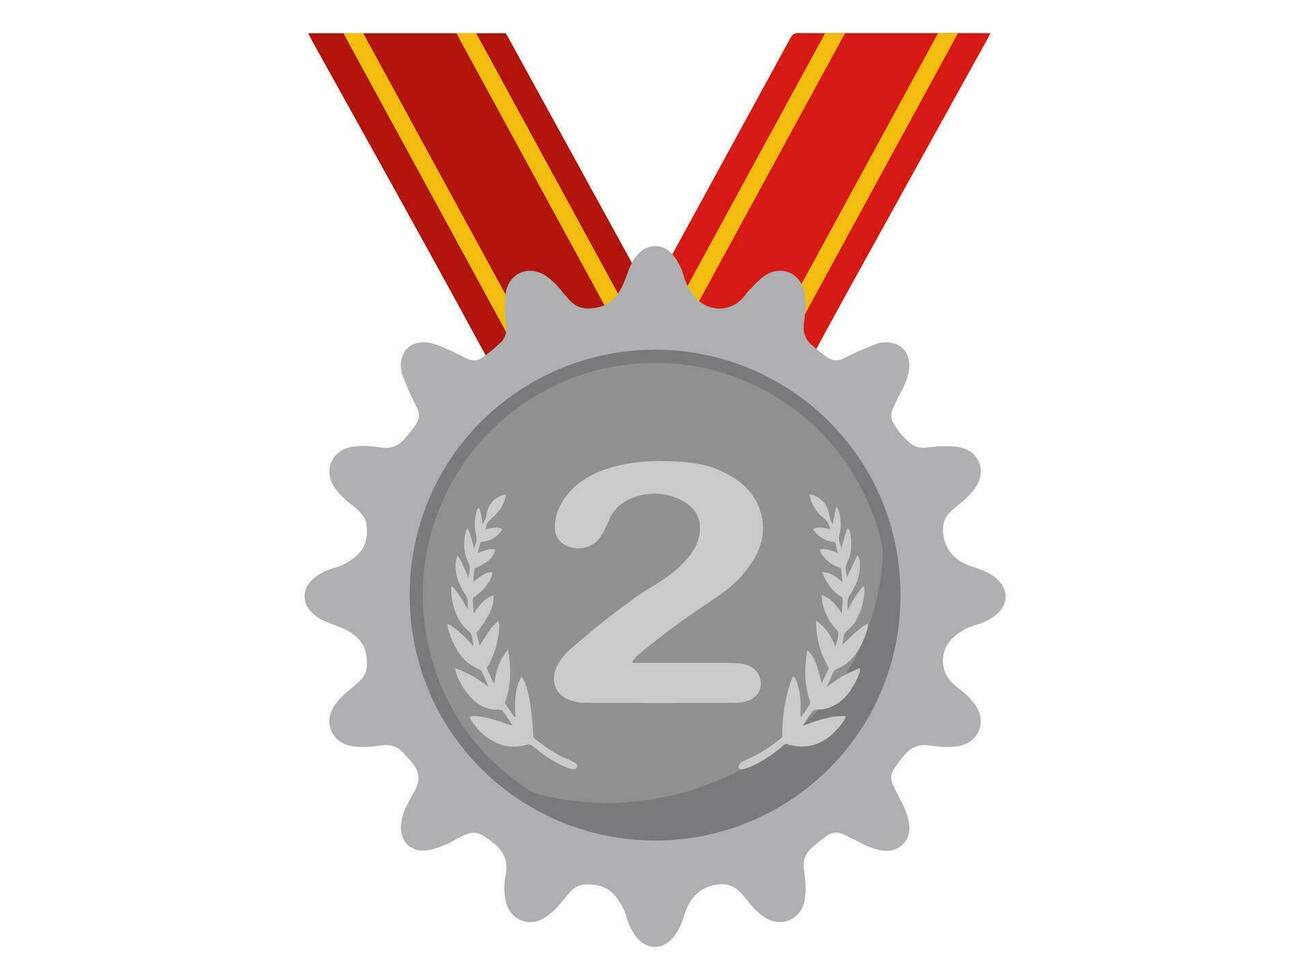 2 .. Platz Silber Medaille Illustration vektor